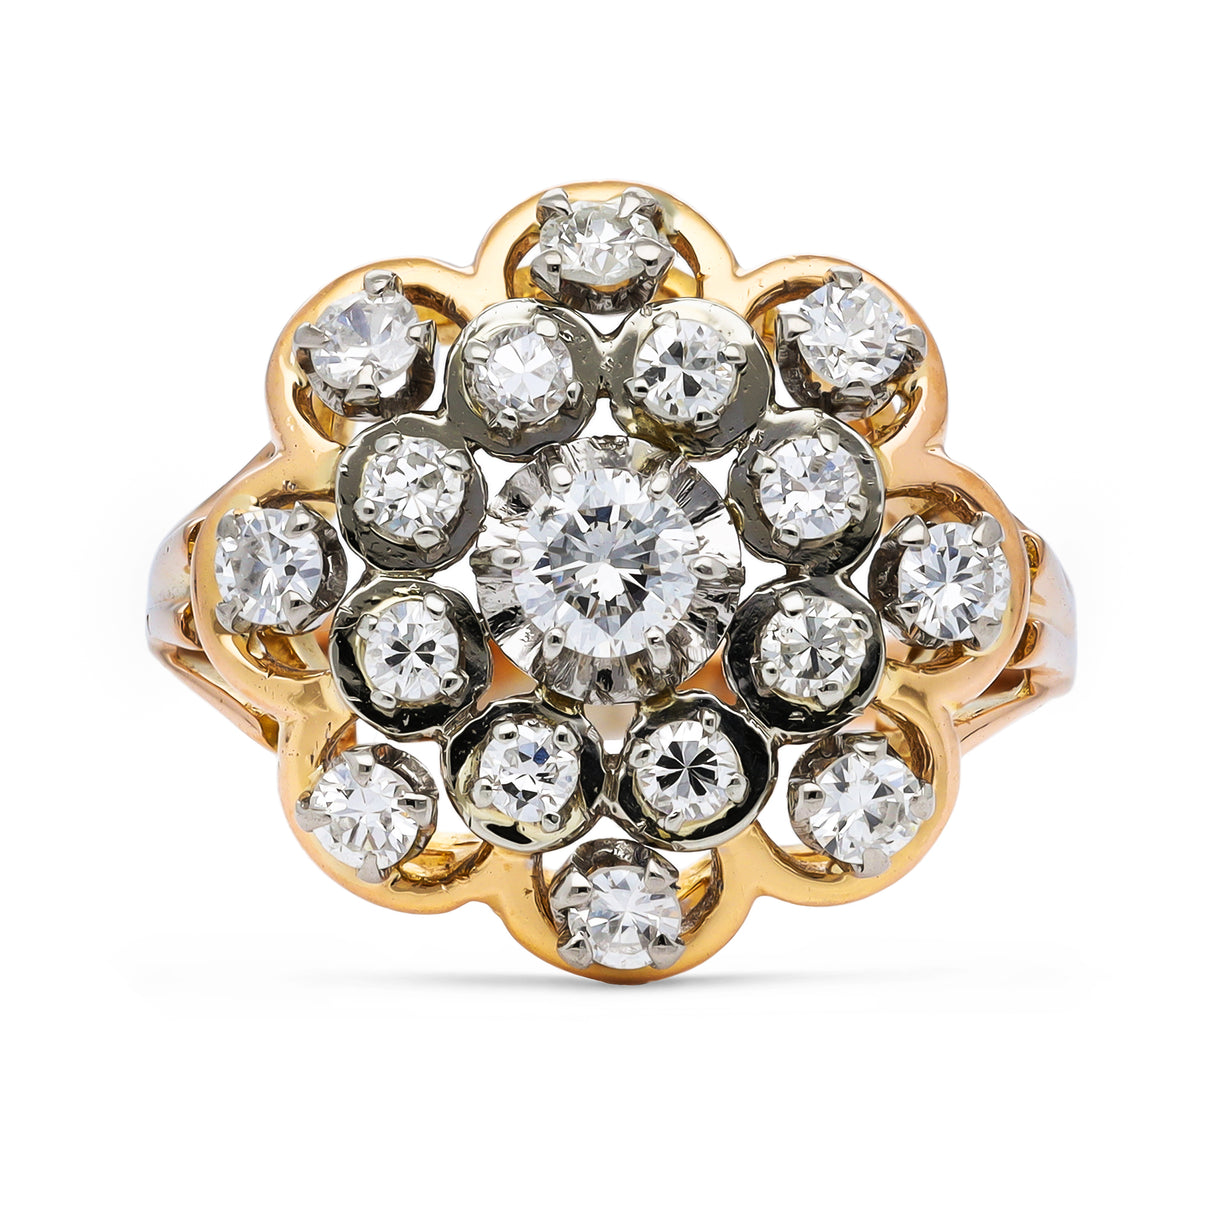 Vintage diamond cluster ring, 18ct rose gold